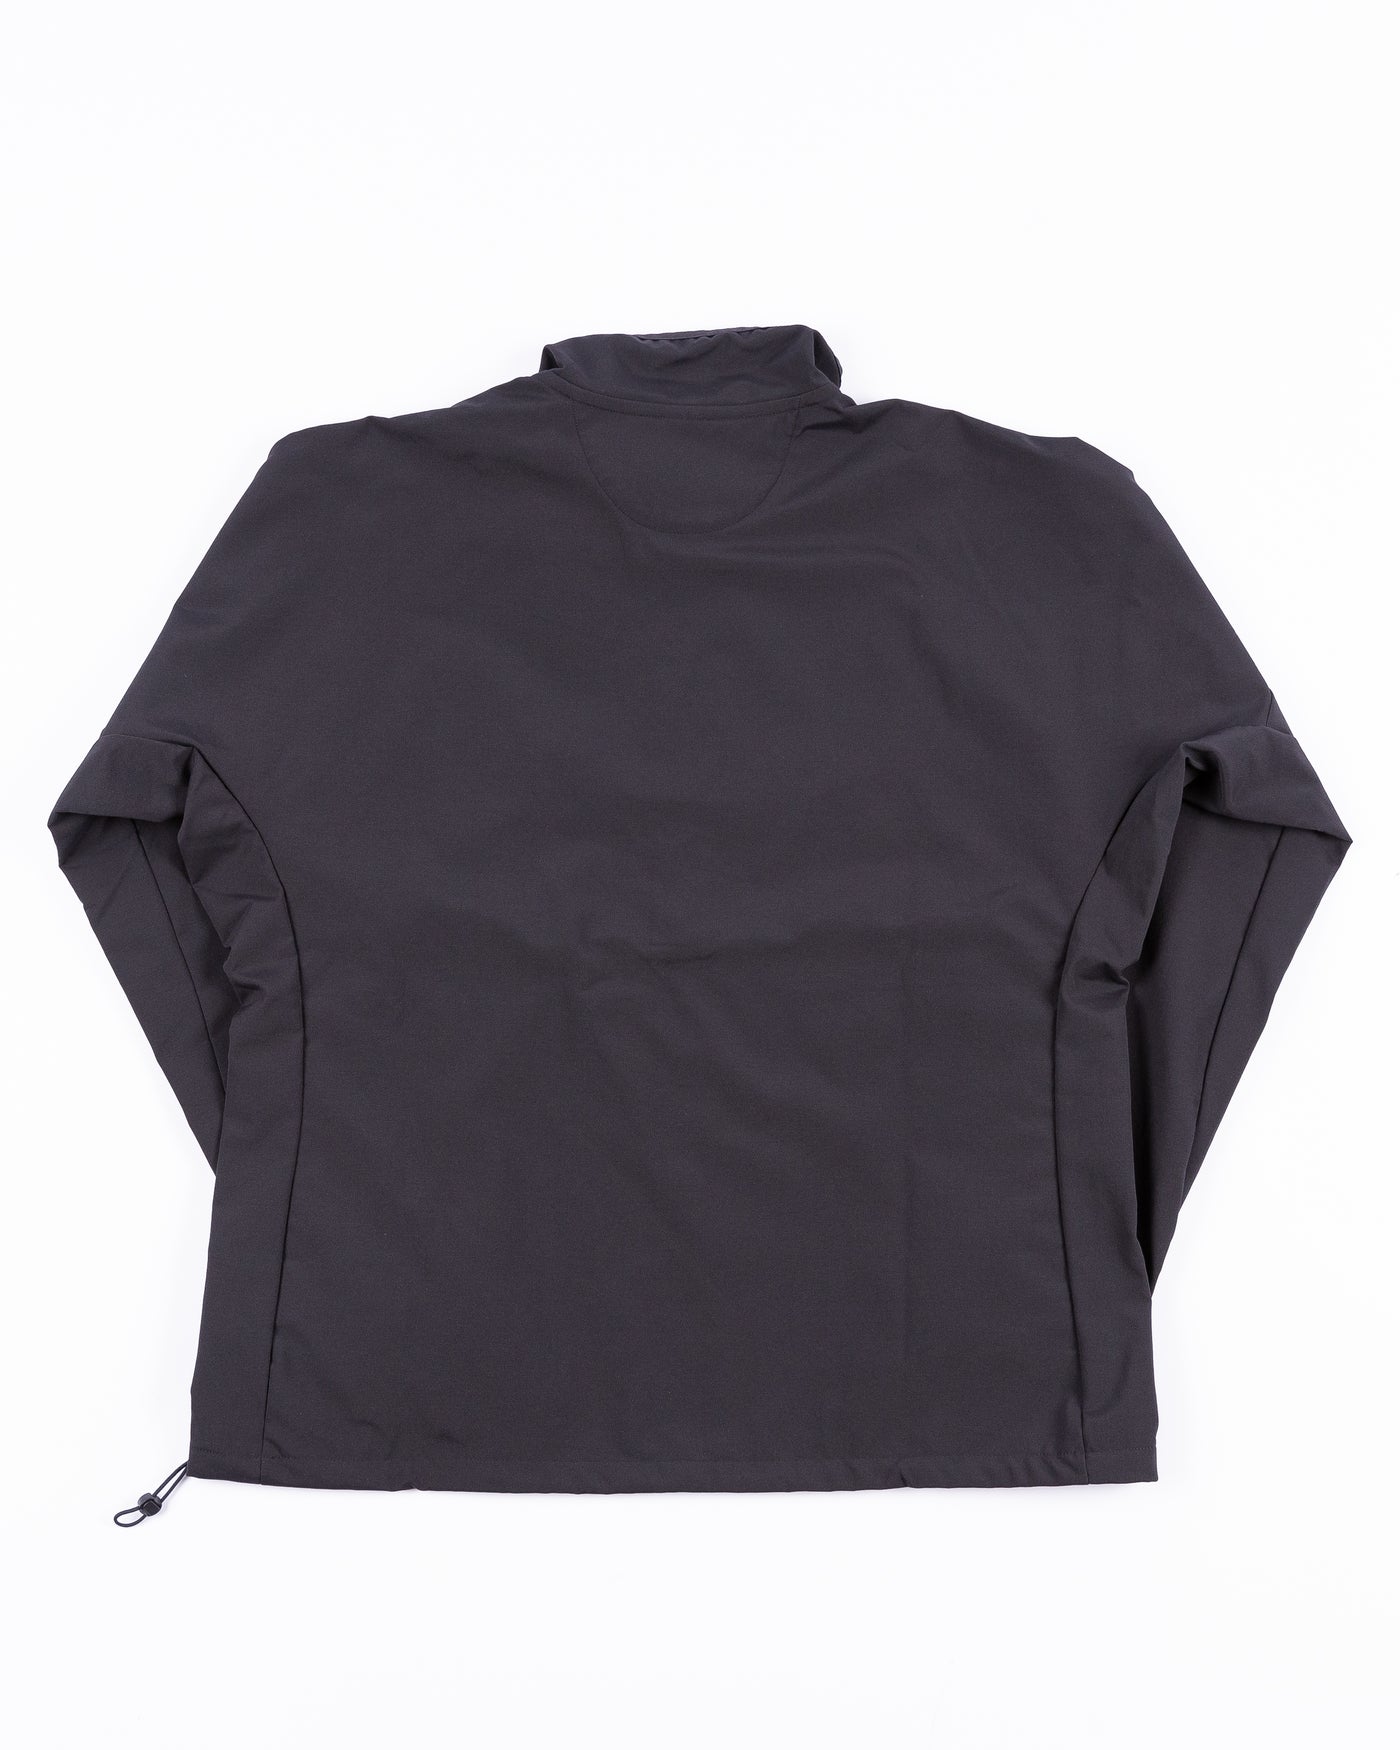 black ladies adidas jacket with half zip and Chicago Blackhawks primary logo on left chest - back lay flat